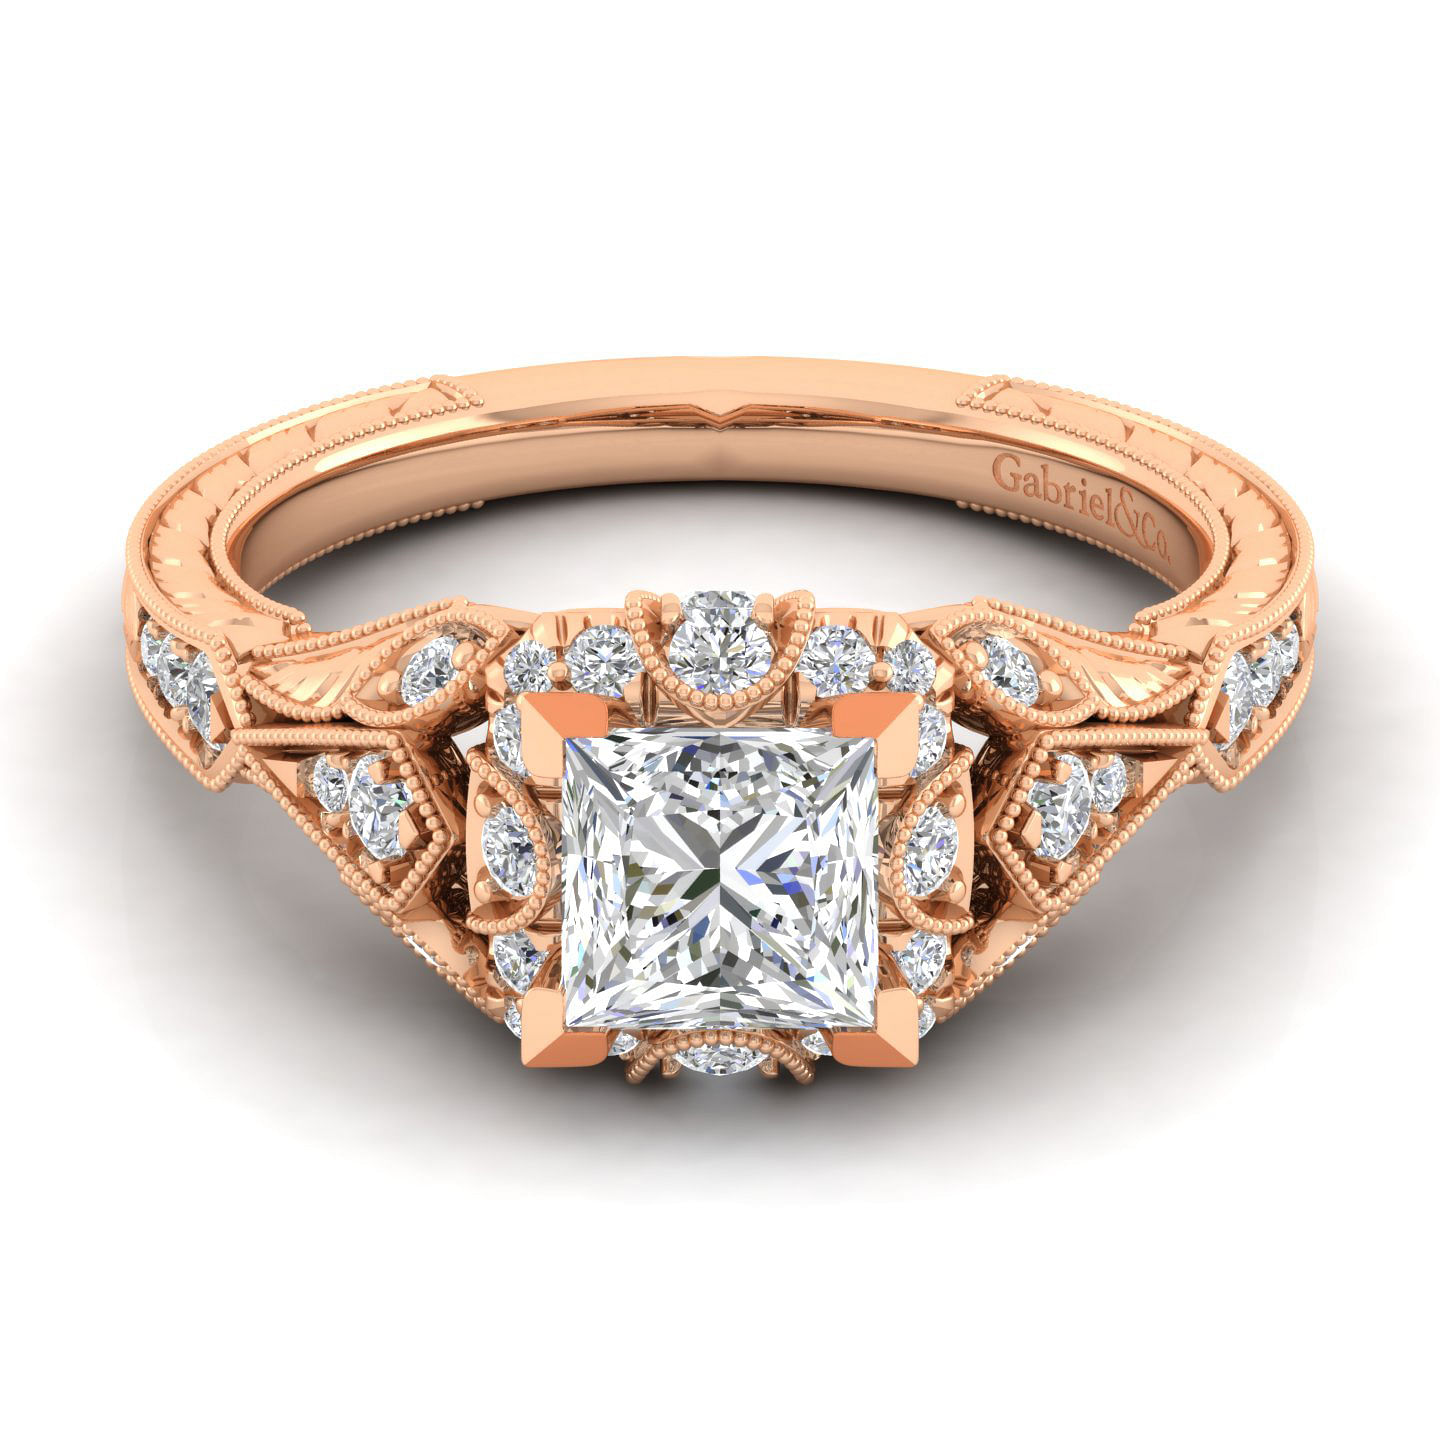 Annadale - Unique 14K Rose Gold Vintage Inspired Princess Cut Diamond Halo Engagement Ring